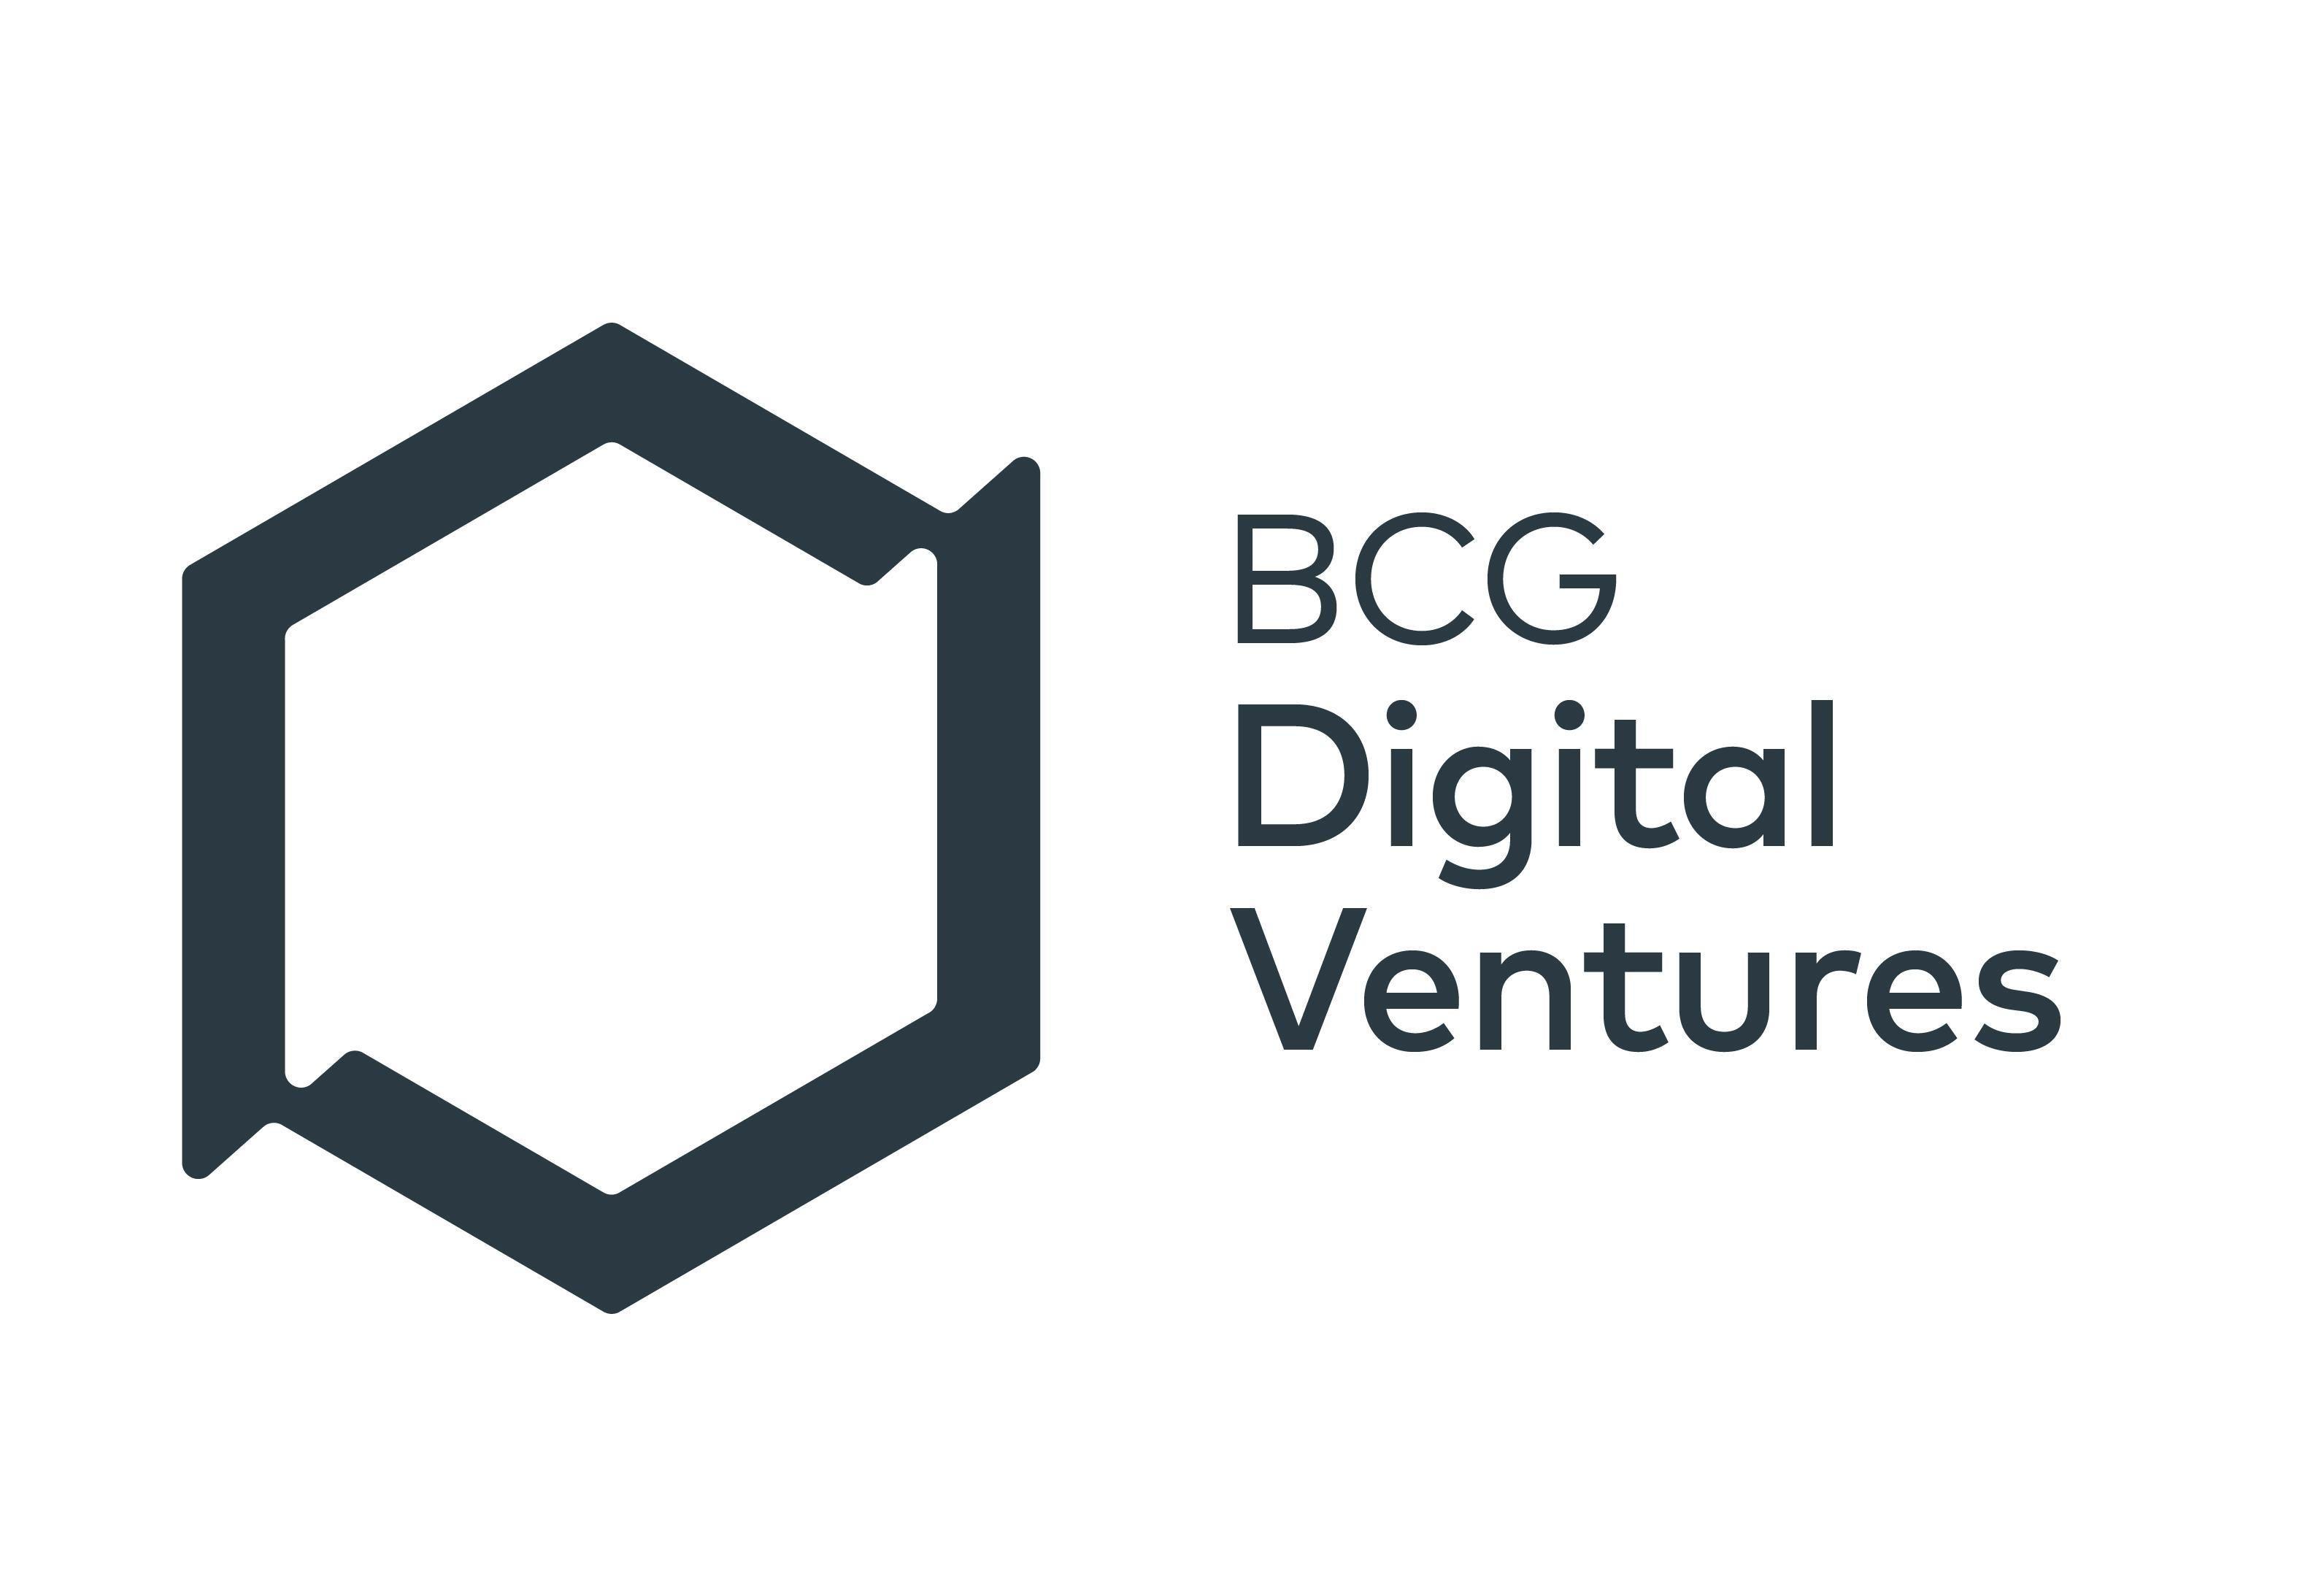 BCG Logo - Owler Reports - BCG Digital Ventures: Boston Consulting Group's DV ...